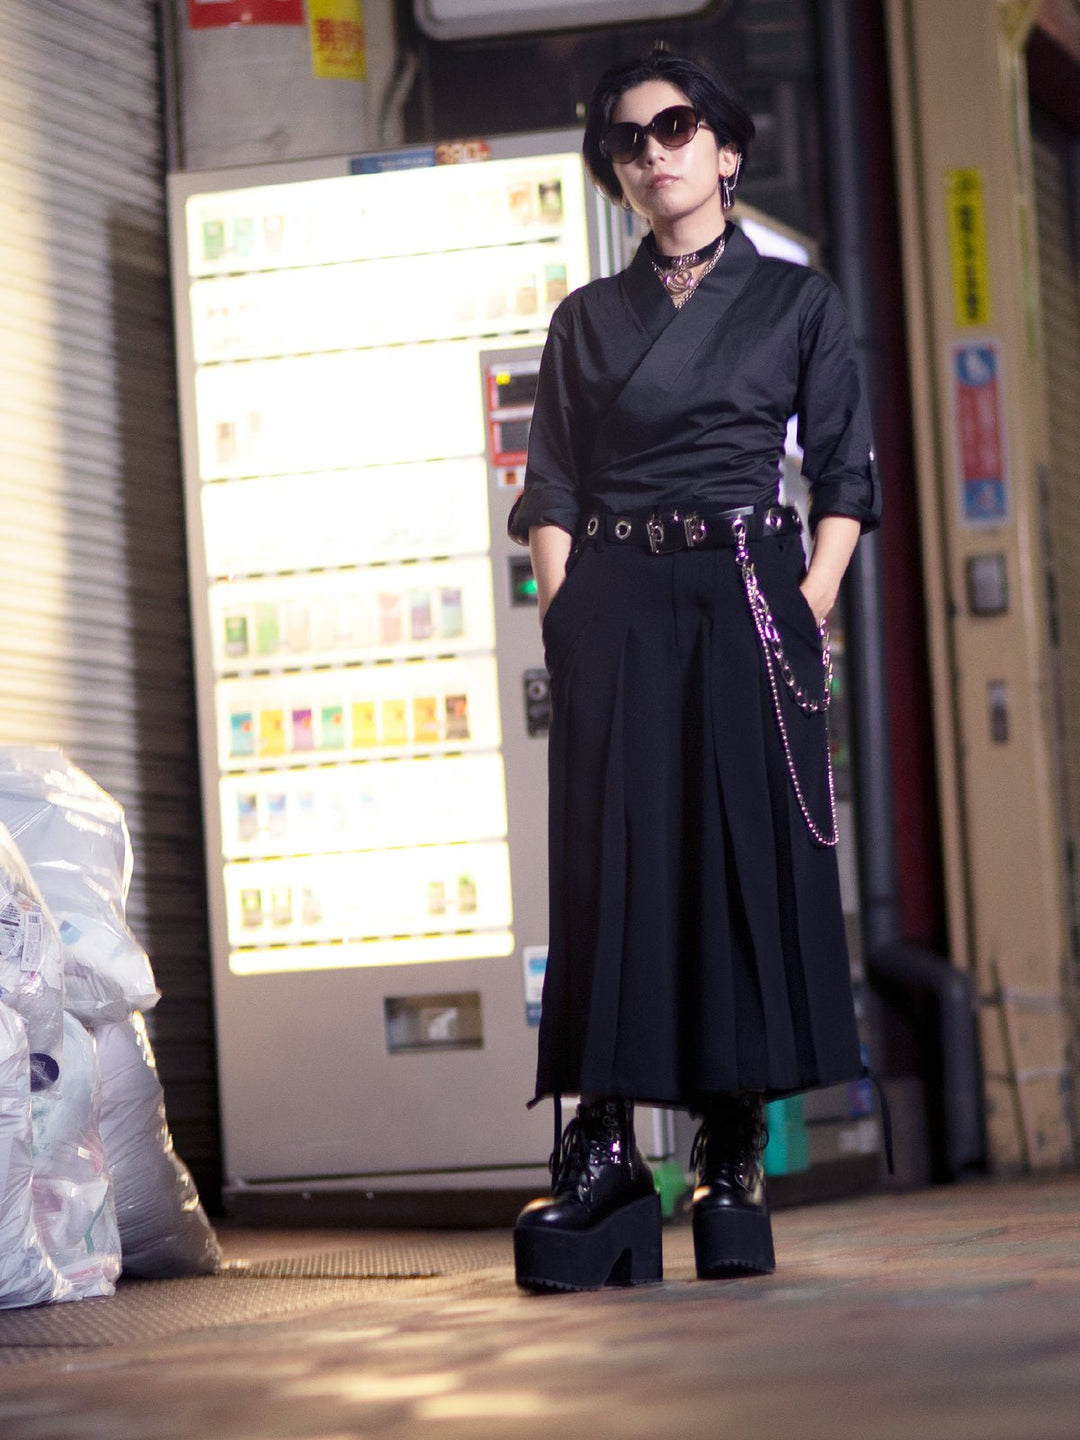 [Pre-order]Samurai Mode Pants II -Eco- - KUDEN by TAKAHIRO SATO